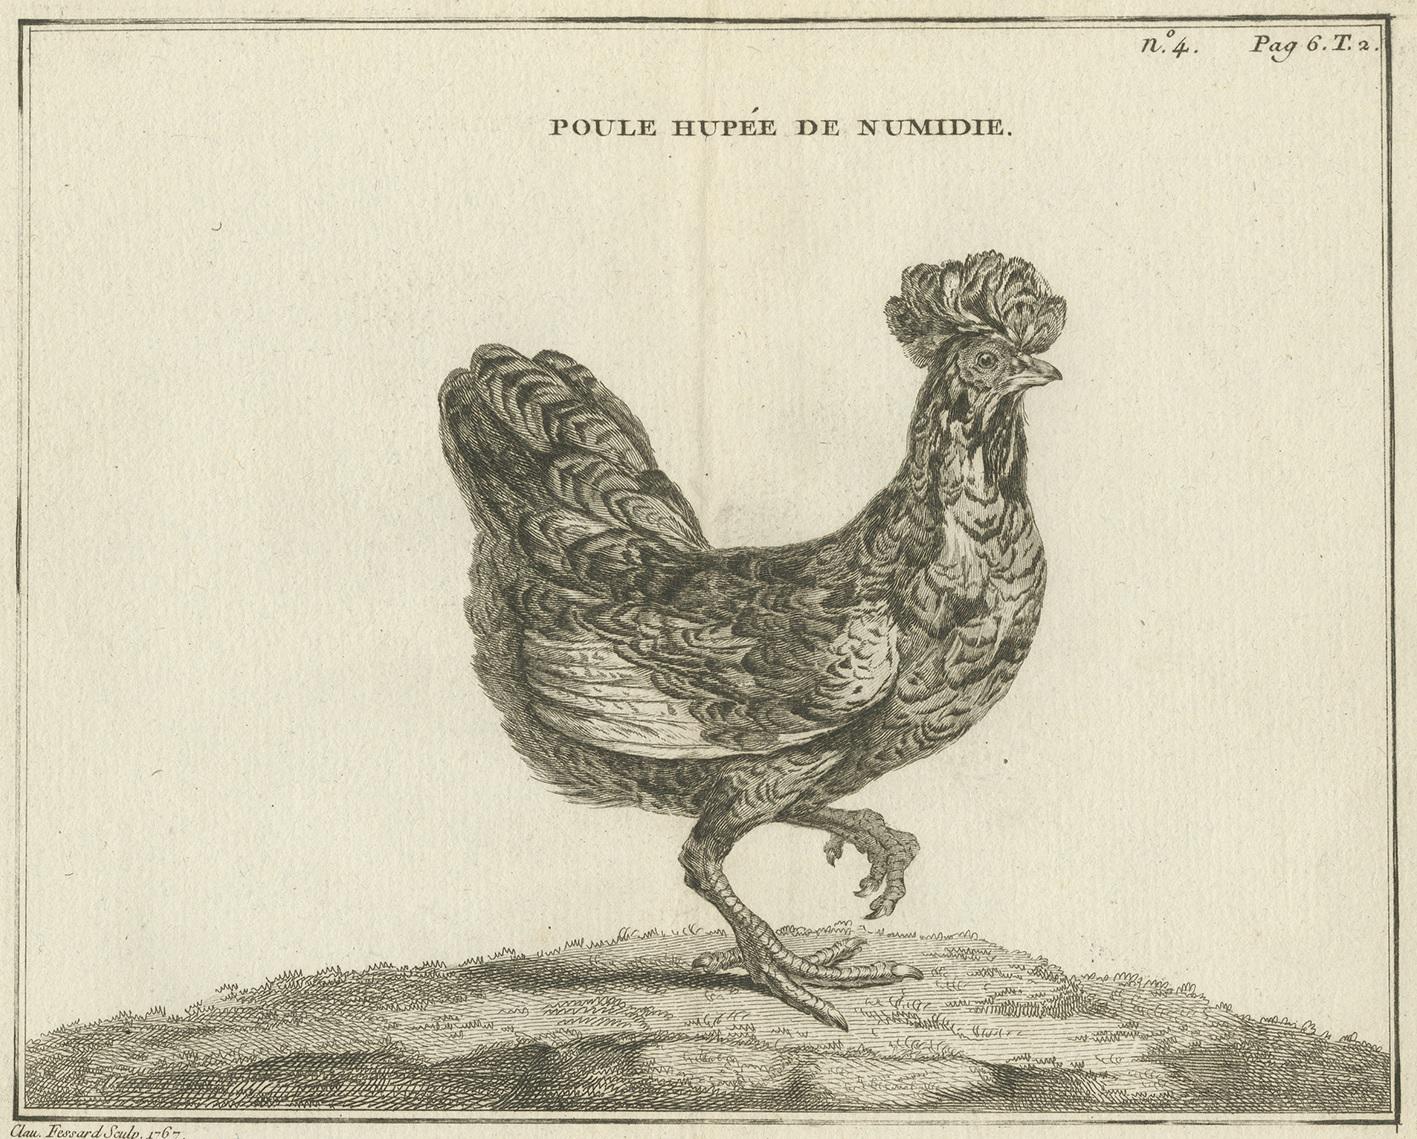 Antique print titled 'Poule hupée de Numidie'. Copper engraving of a Numidia hen. This print originates from 'Handboek der genees- en verloskunde van het vee (..)' by A. Numan. Published by R.J. Schierbeek, 1819. Engraved by C. Fessard.